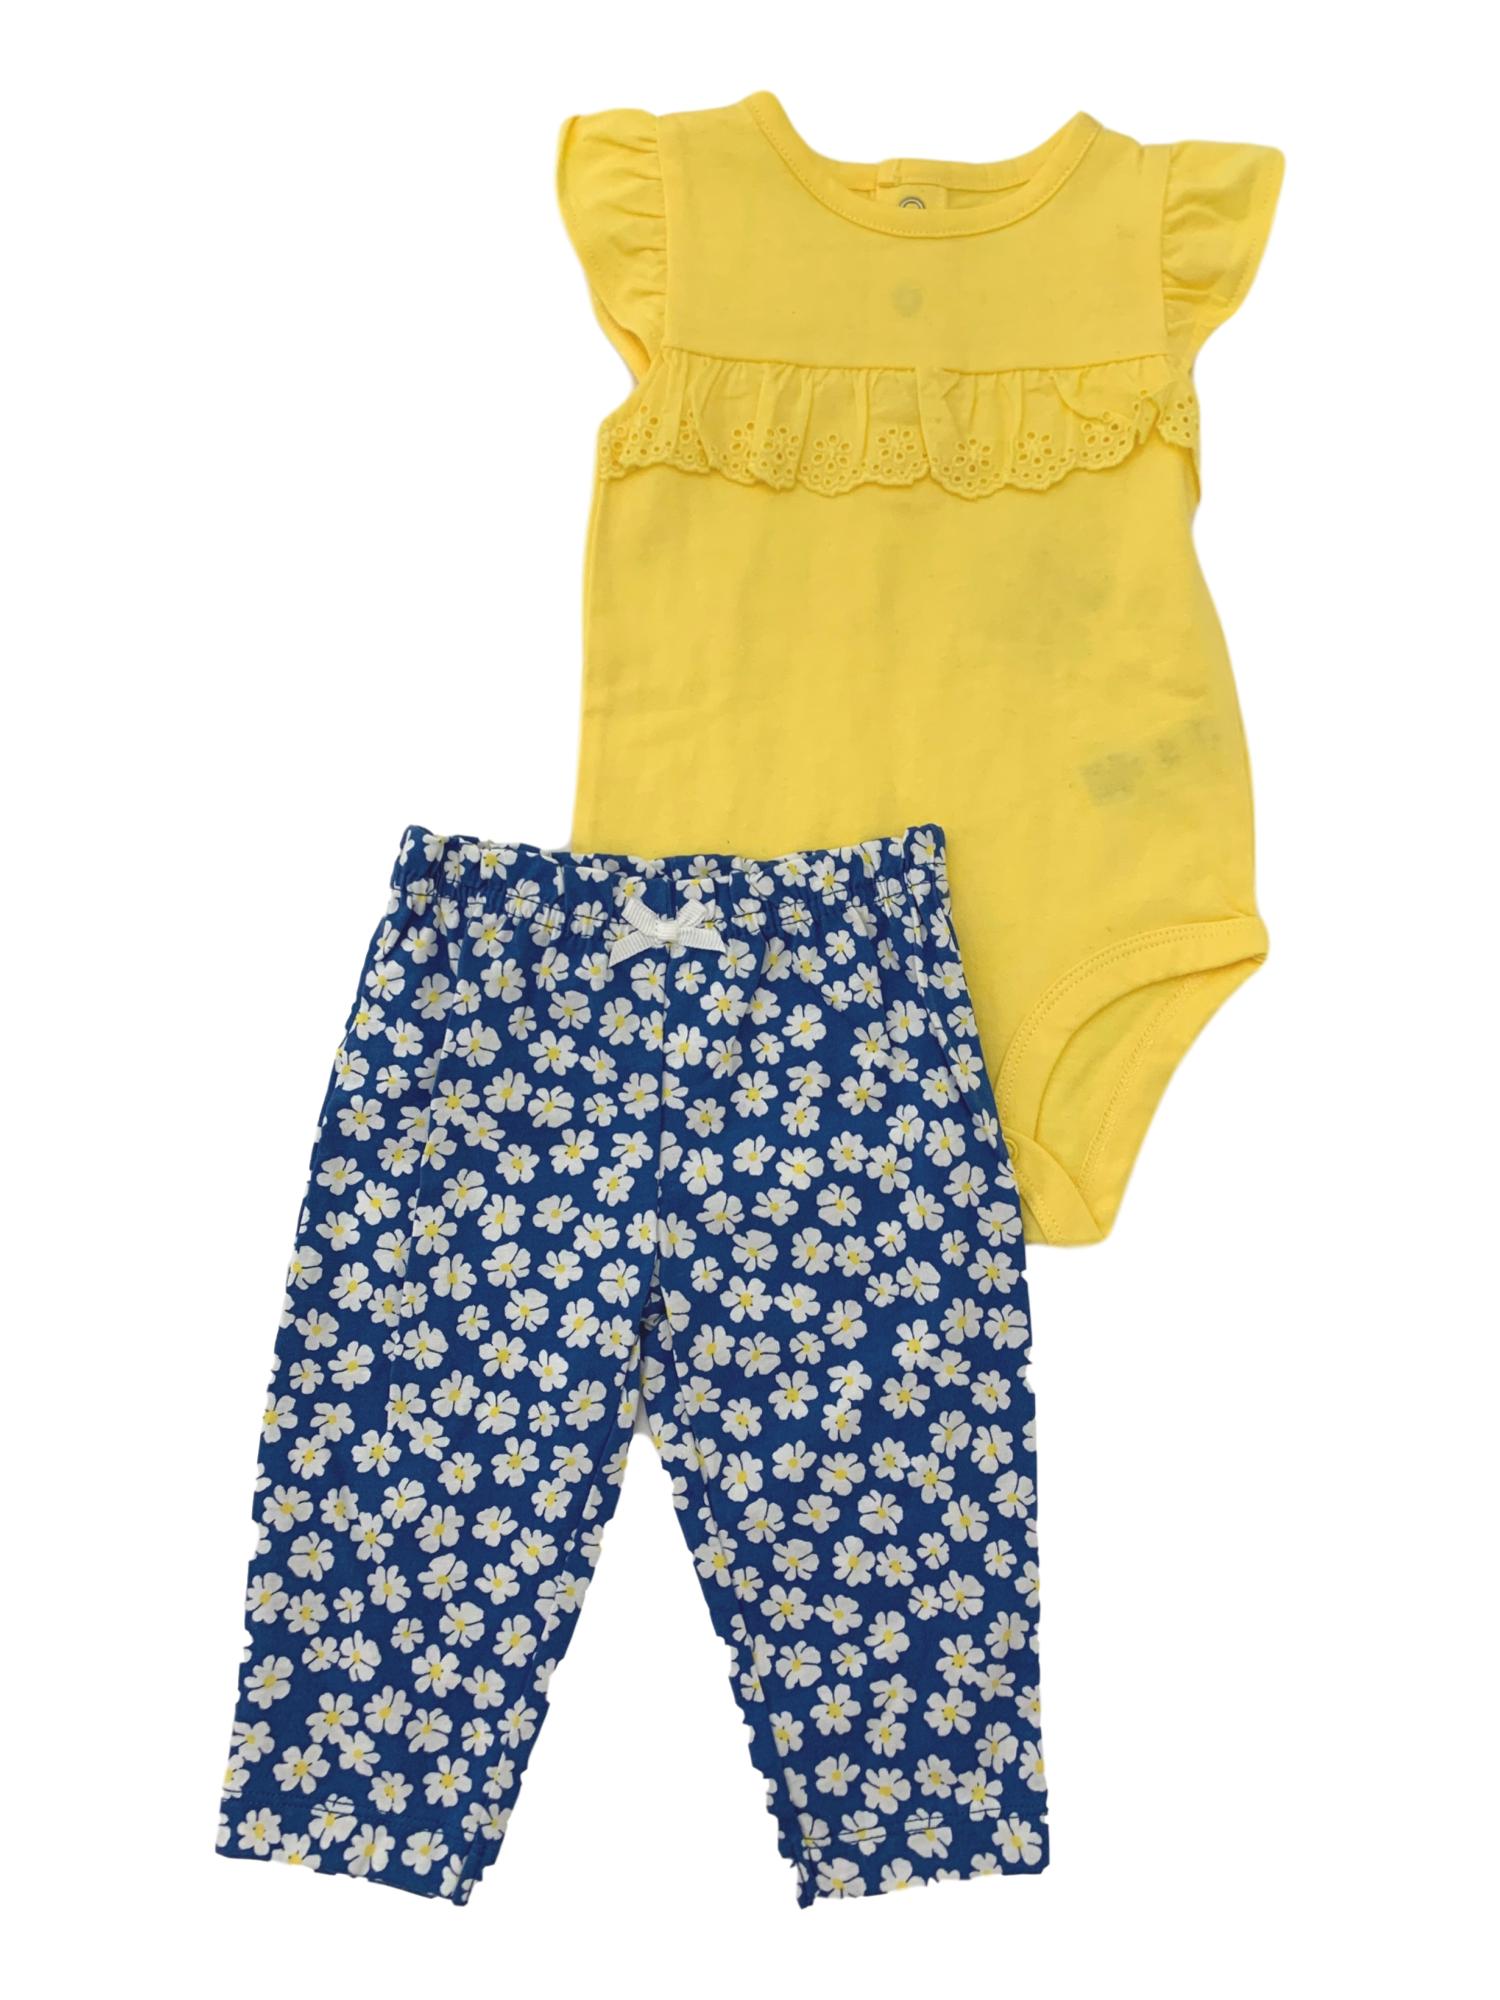 Carter's Carters Baby Girls Yellow Ruffle Bodysuit & Blue White Floral Leggings Set 6M